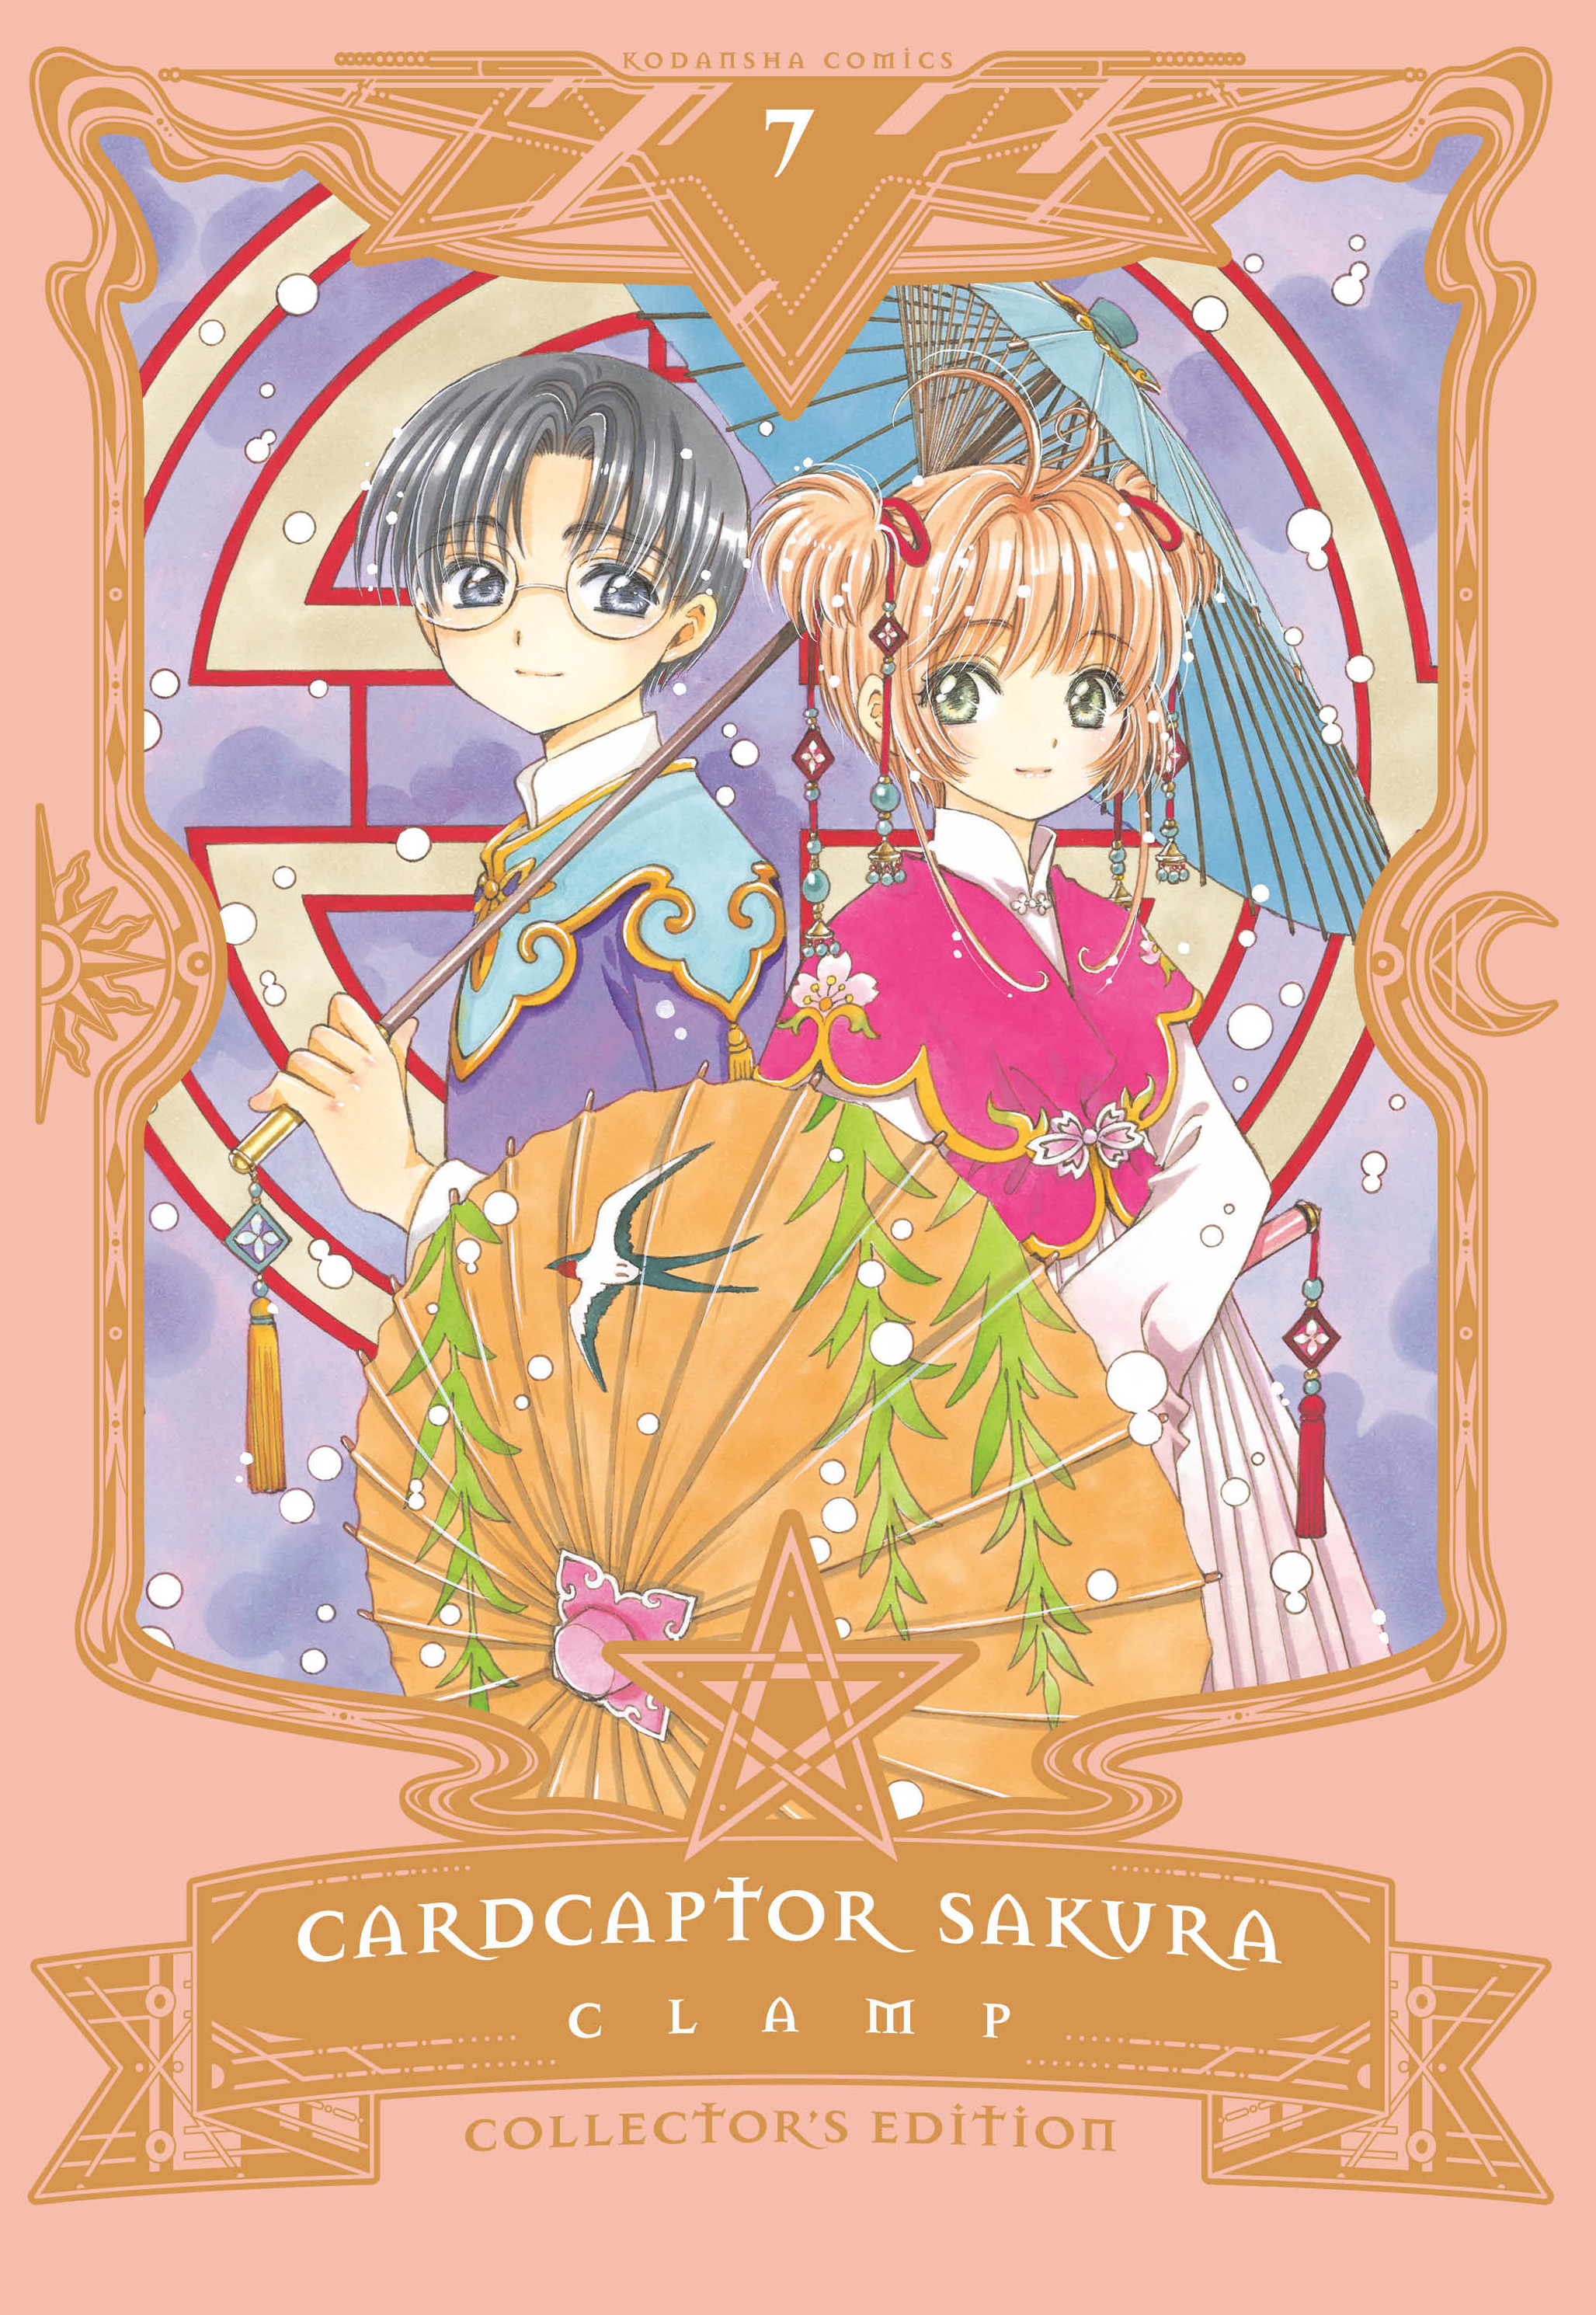 Cardcaptor Sakura Collected Edition Hardcover Volume 7 (Of 9)